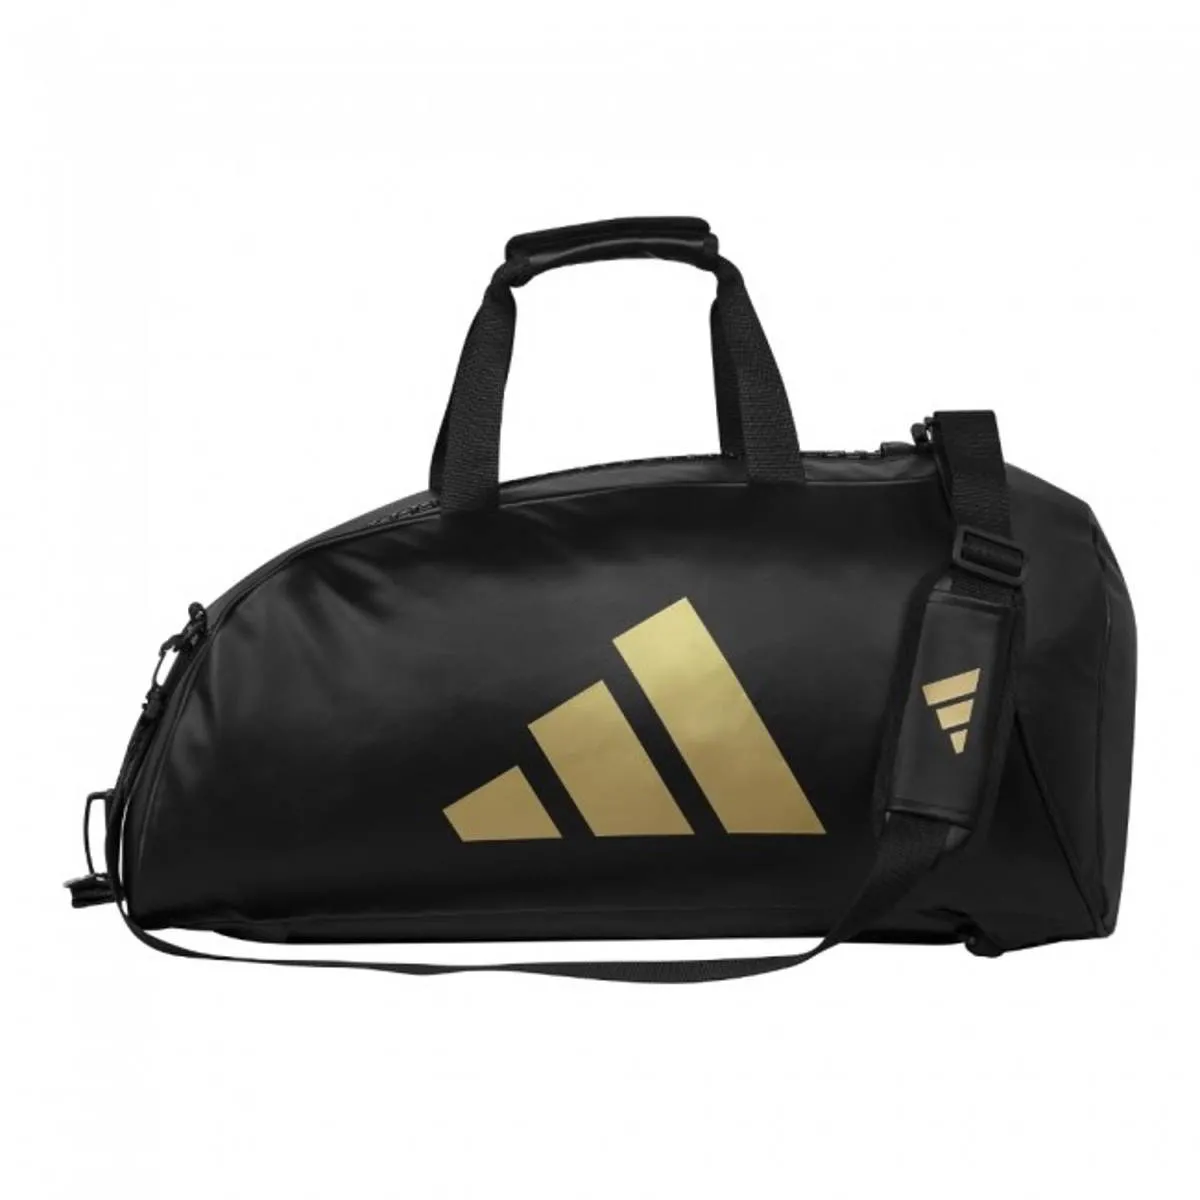 adidas sports bag sports rucksack black/gold imitation leather